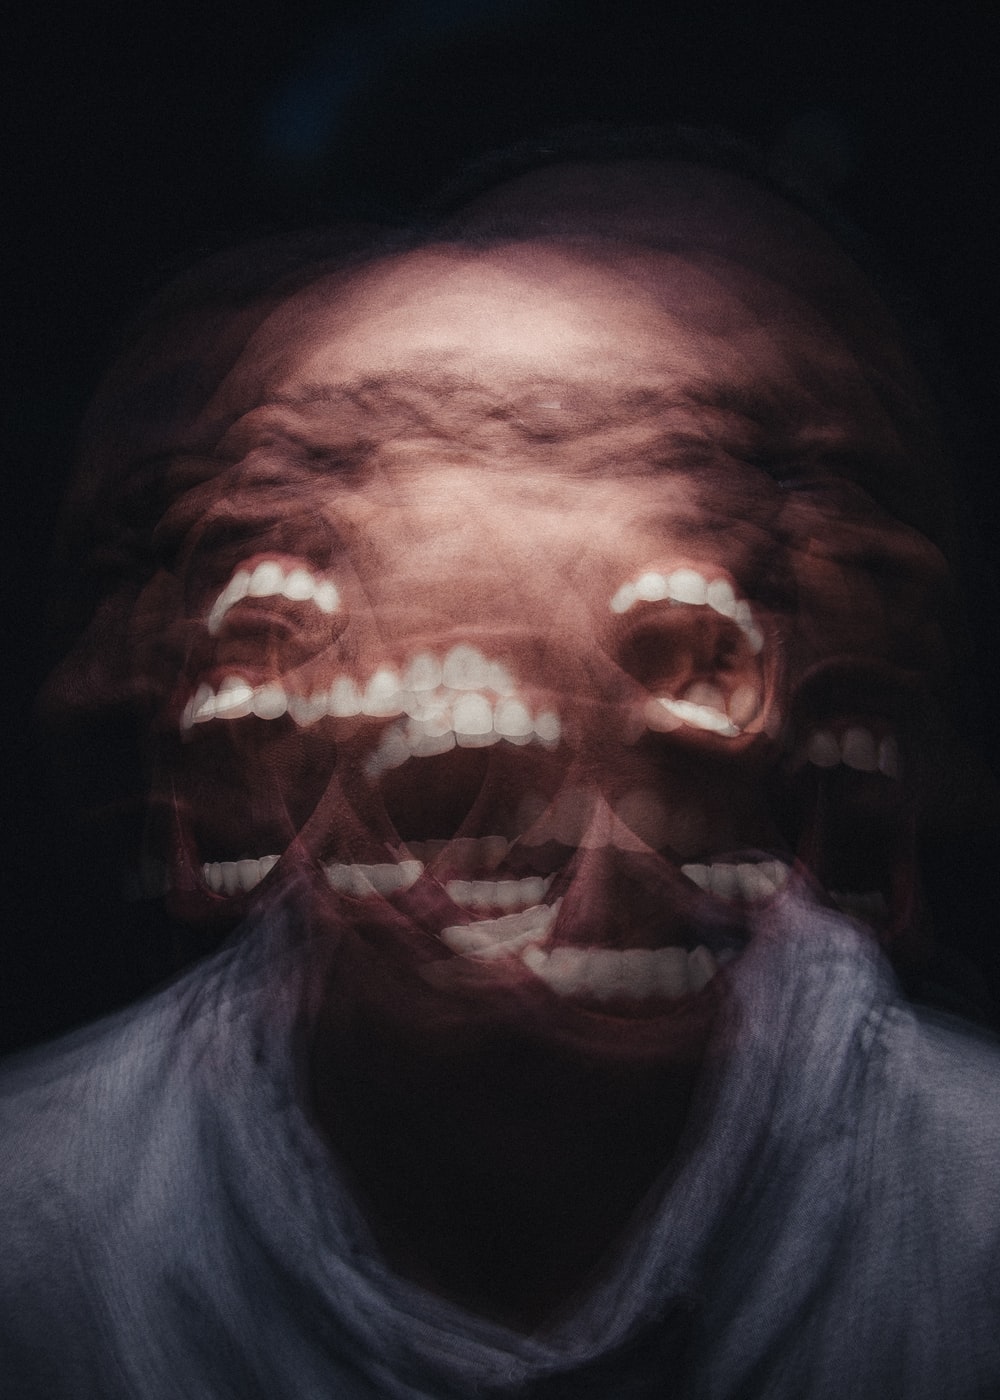 Scream Picture [HQ]. Download Free Image